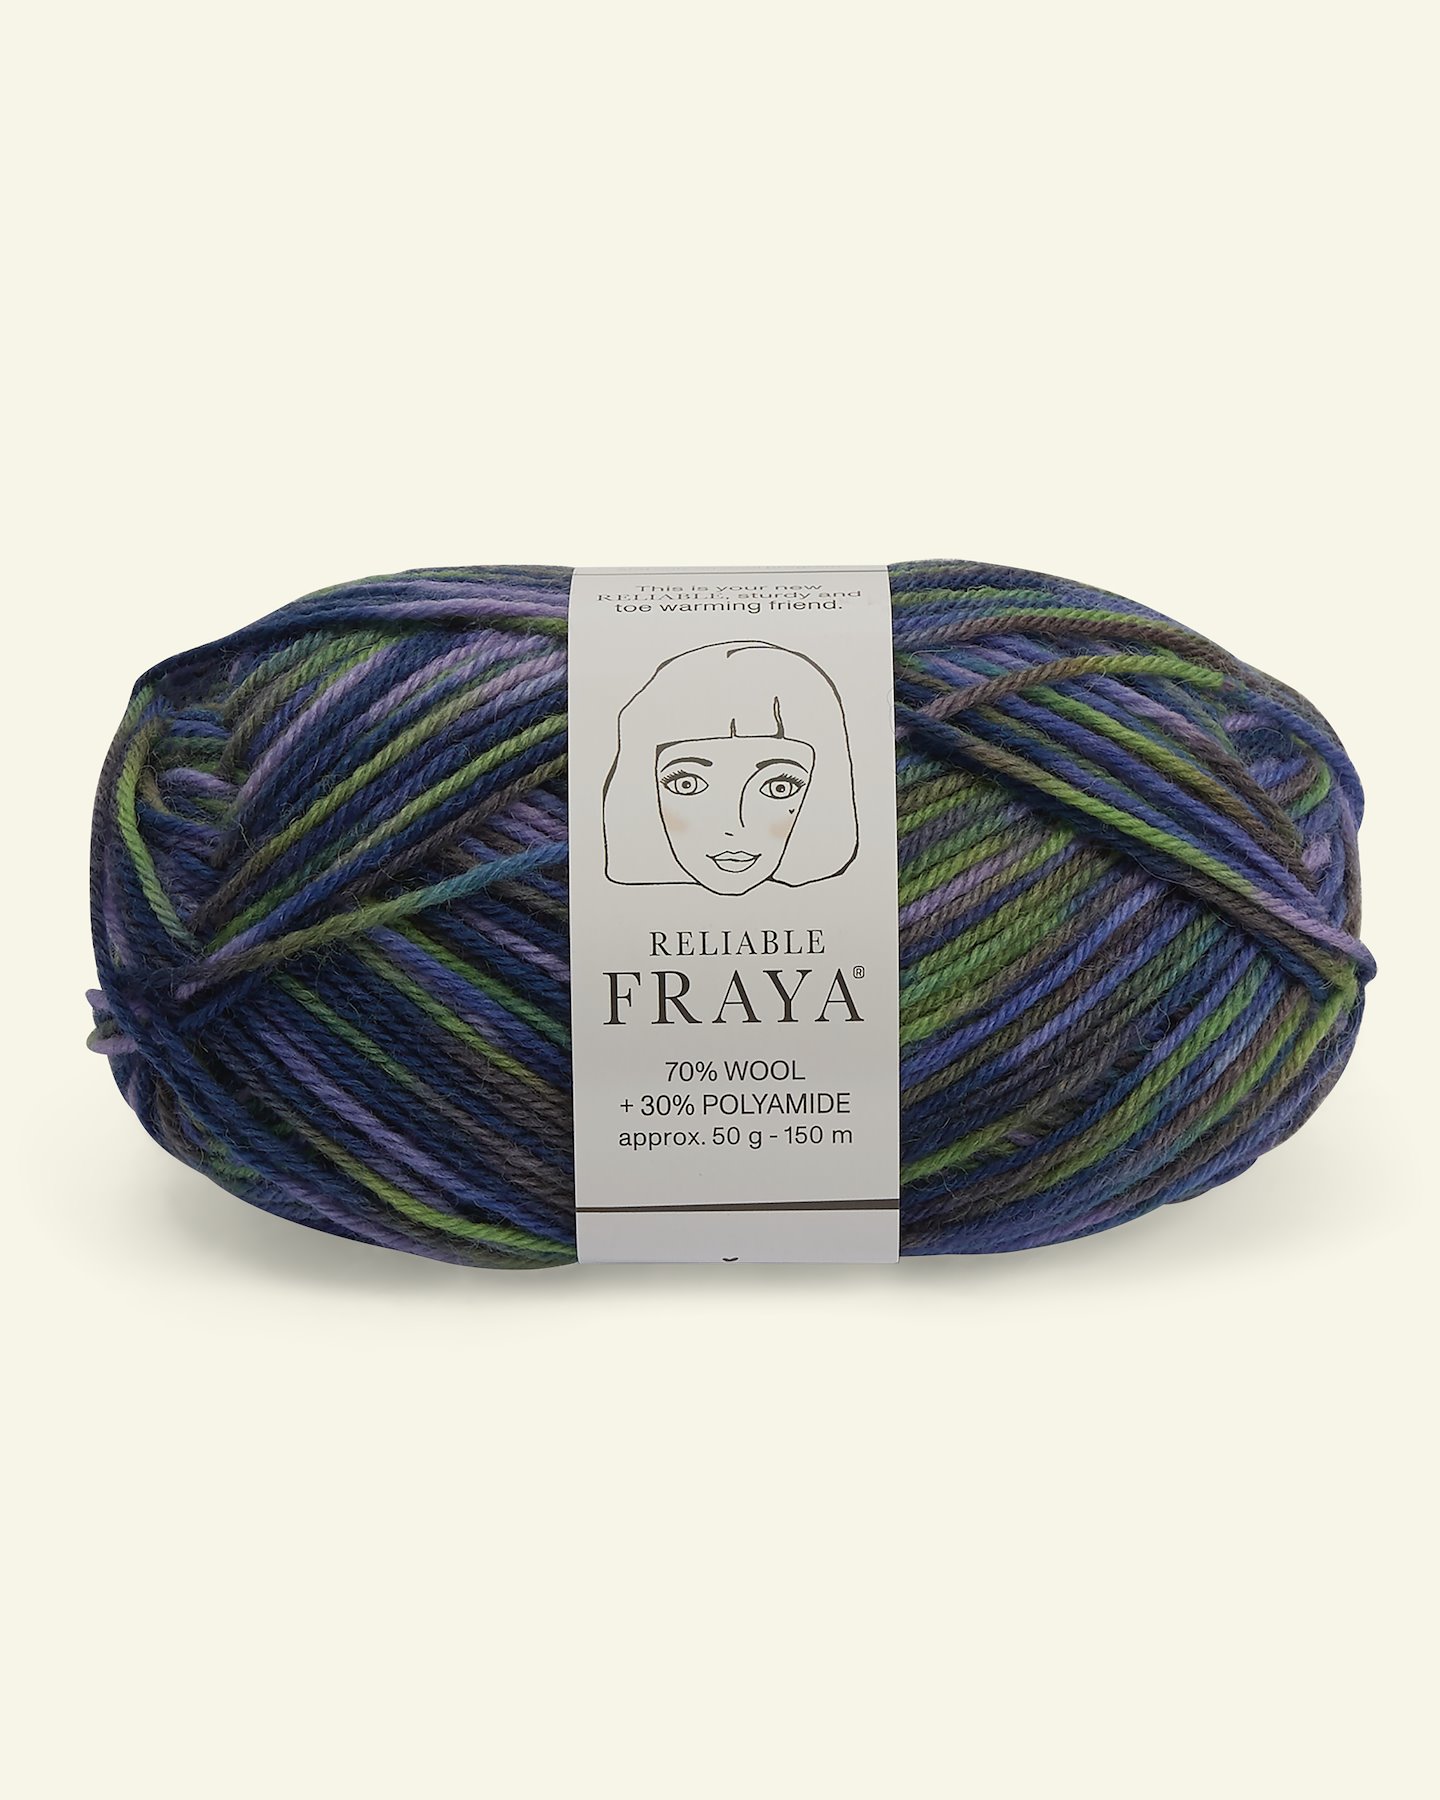 FRAYA, wool yarn "Reliable", green/purplw mix col. 90001202_pack